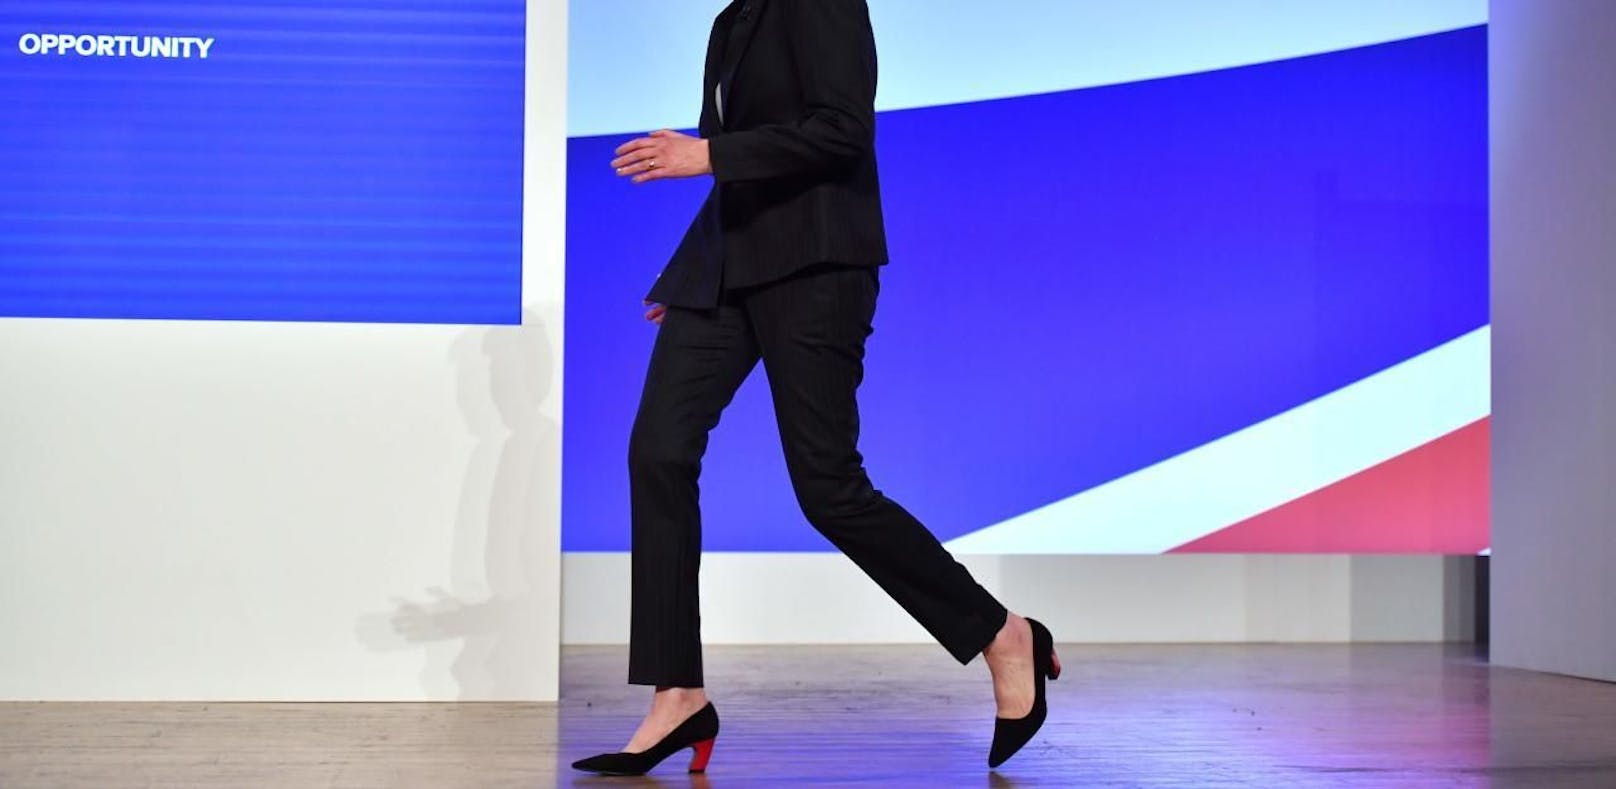 Theresa May tanzt vor Rede zu "Dancing Queen"